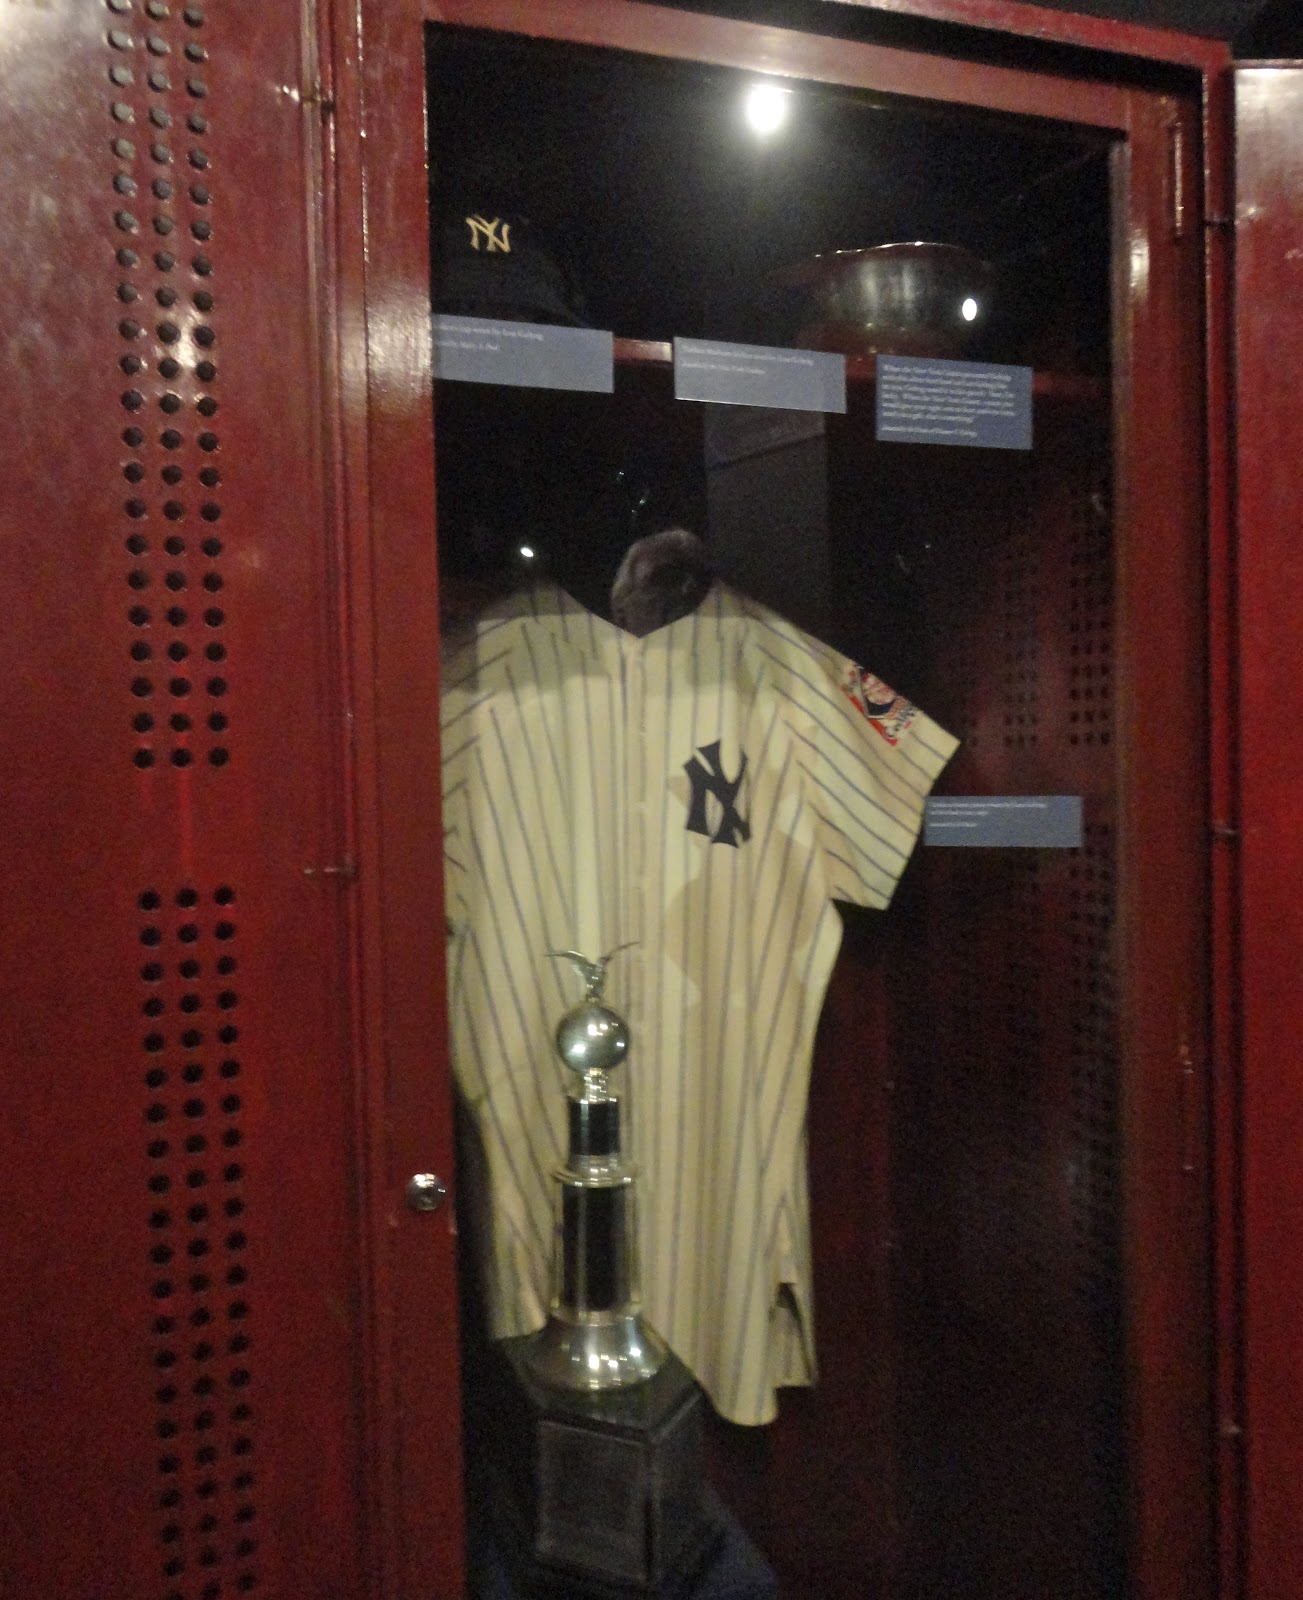 Lou Gehrig's uniform.